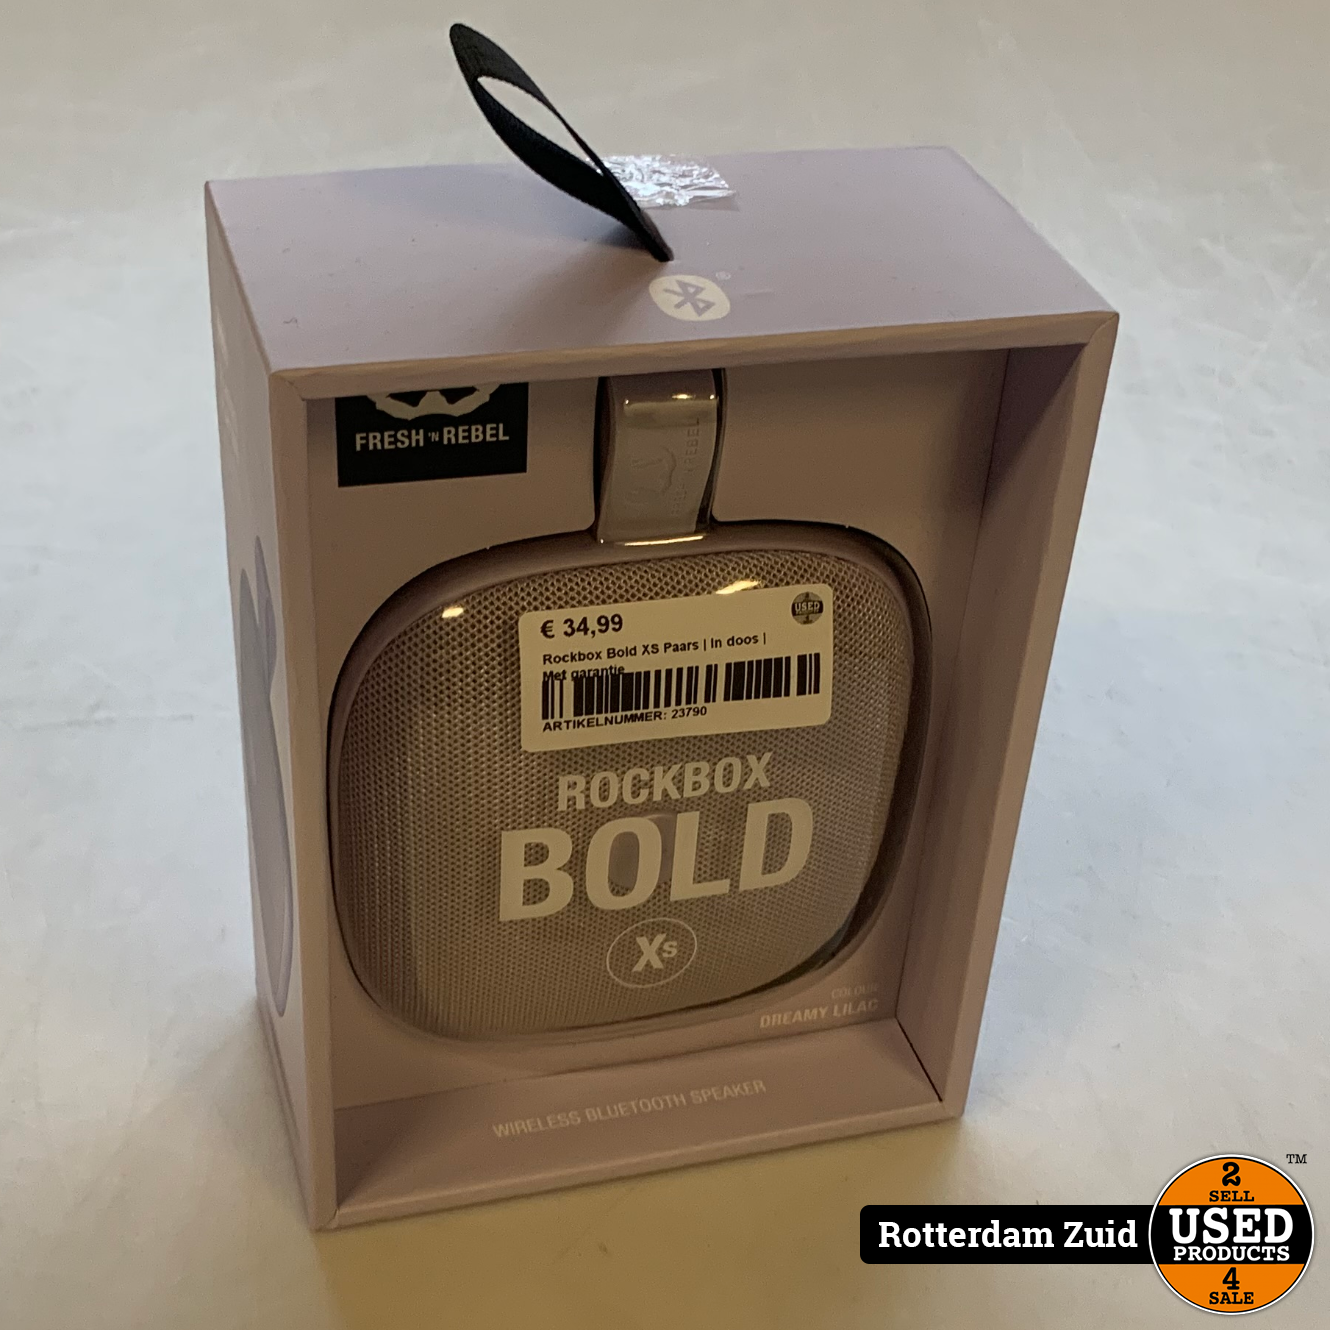 Rockbox Bold XS Paars | In doos | Met garantie - Used Products Rotterdam  Zuid